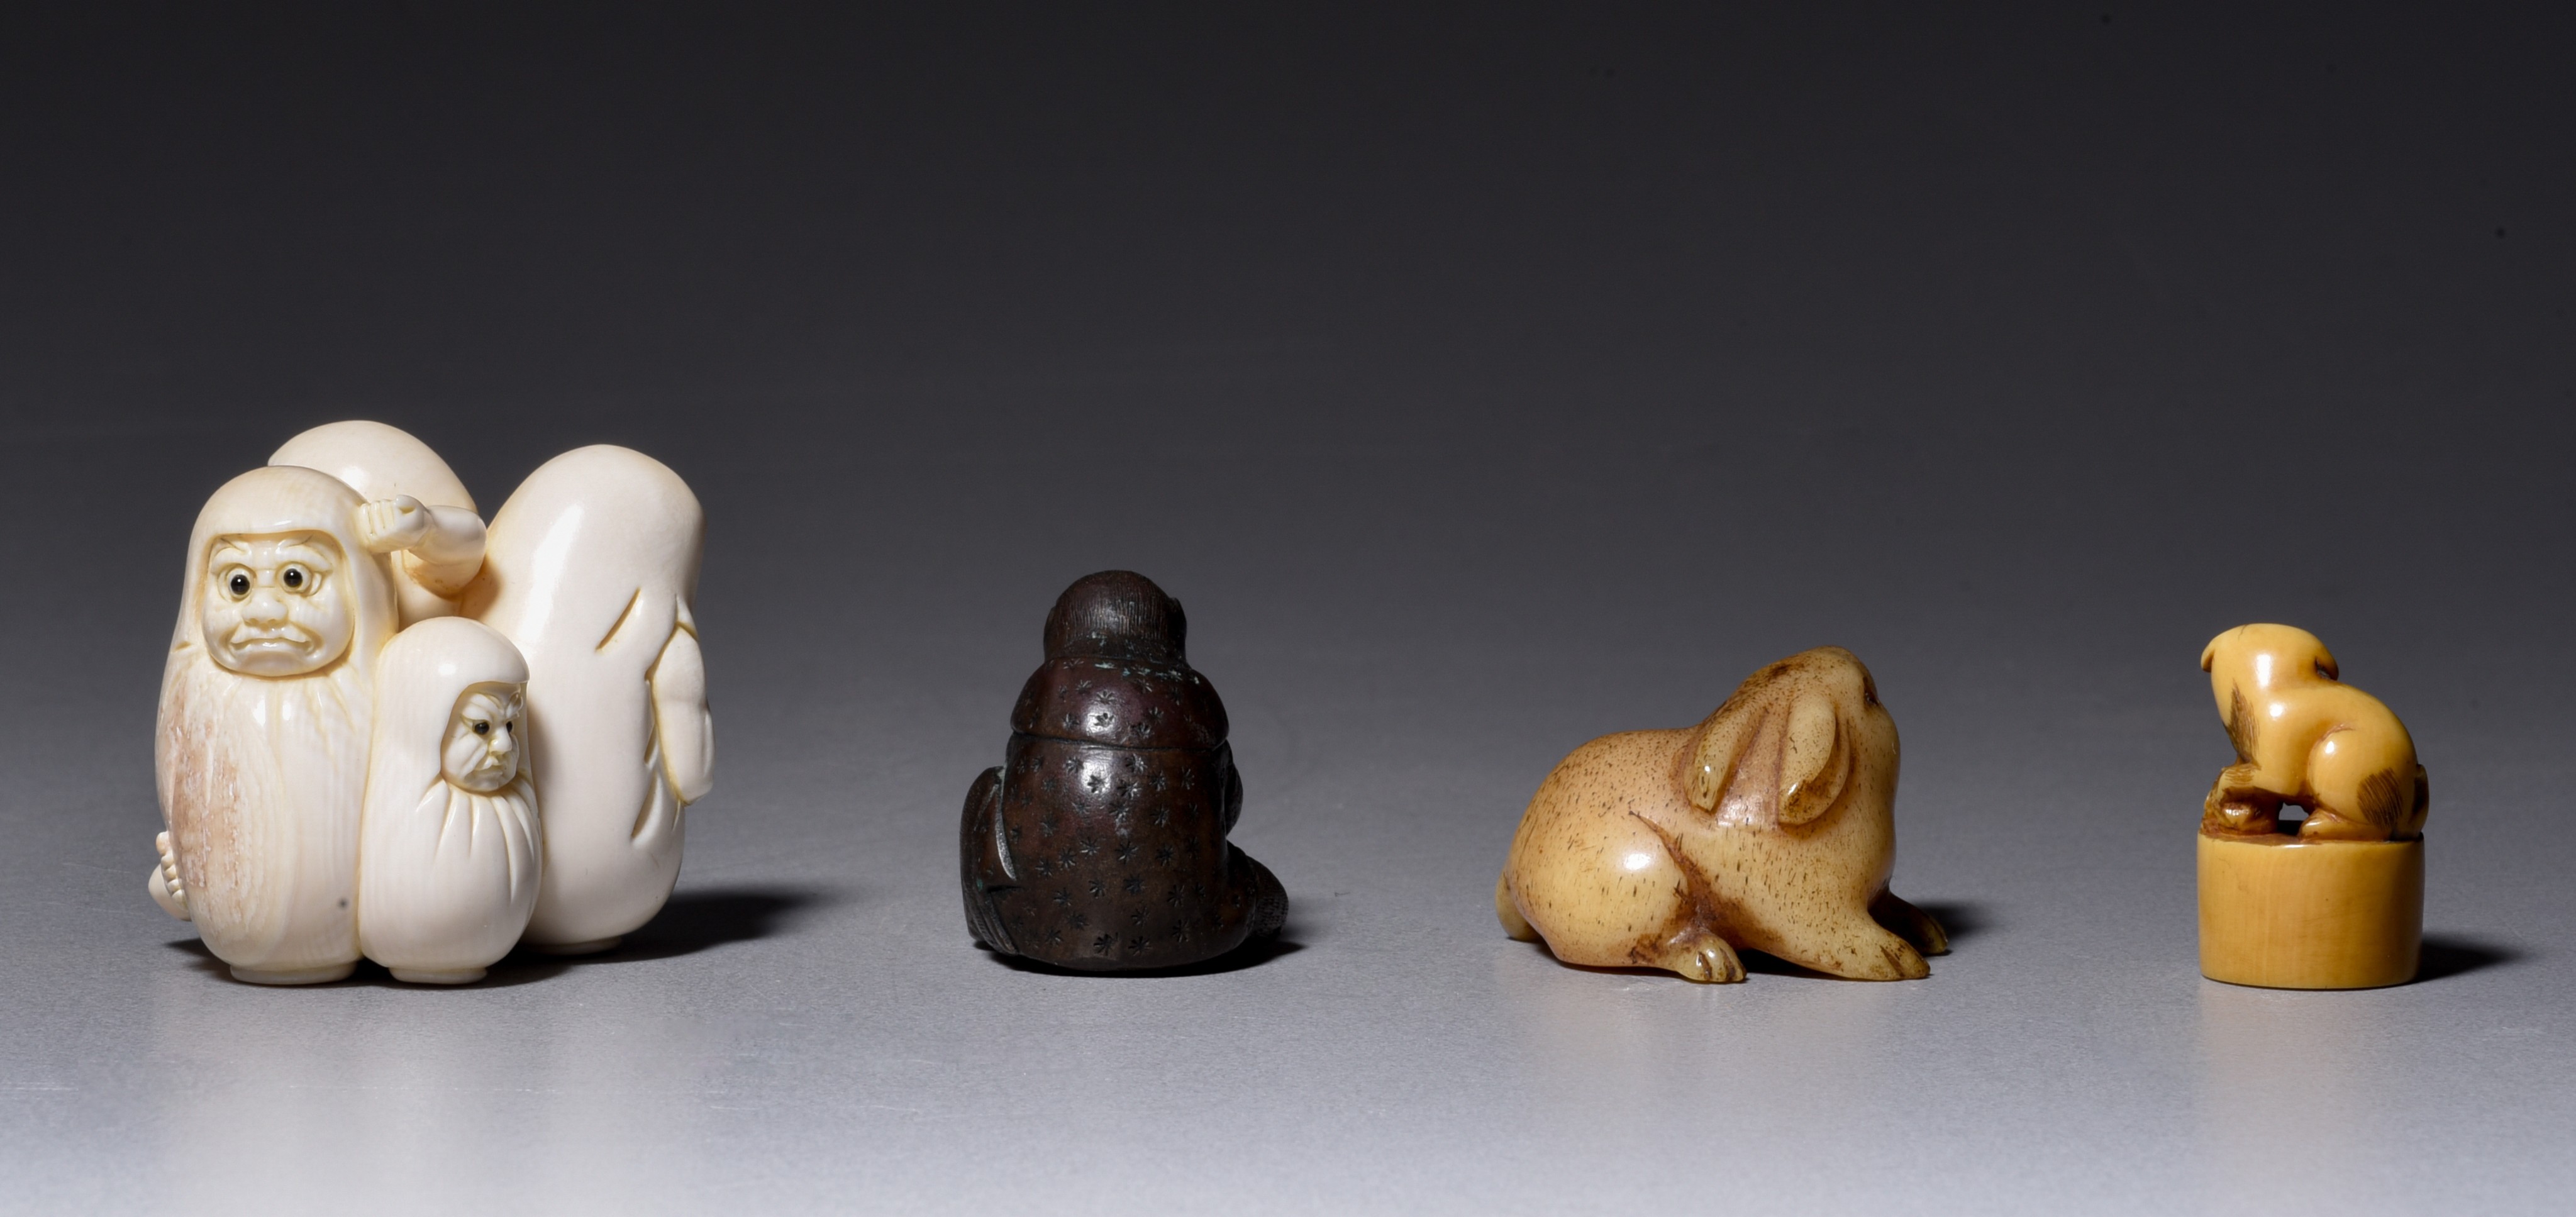 Three okimono and one netsuke, ivory 43g - 5g (+) - Image 2 of 5